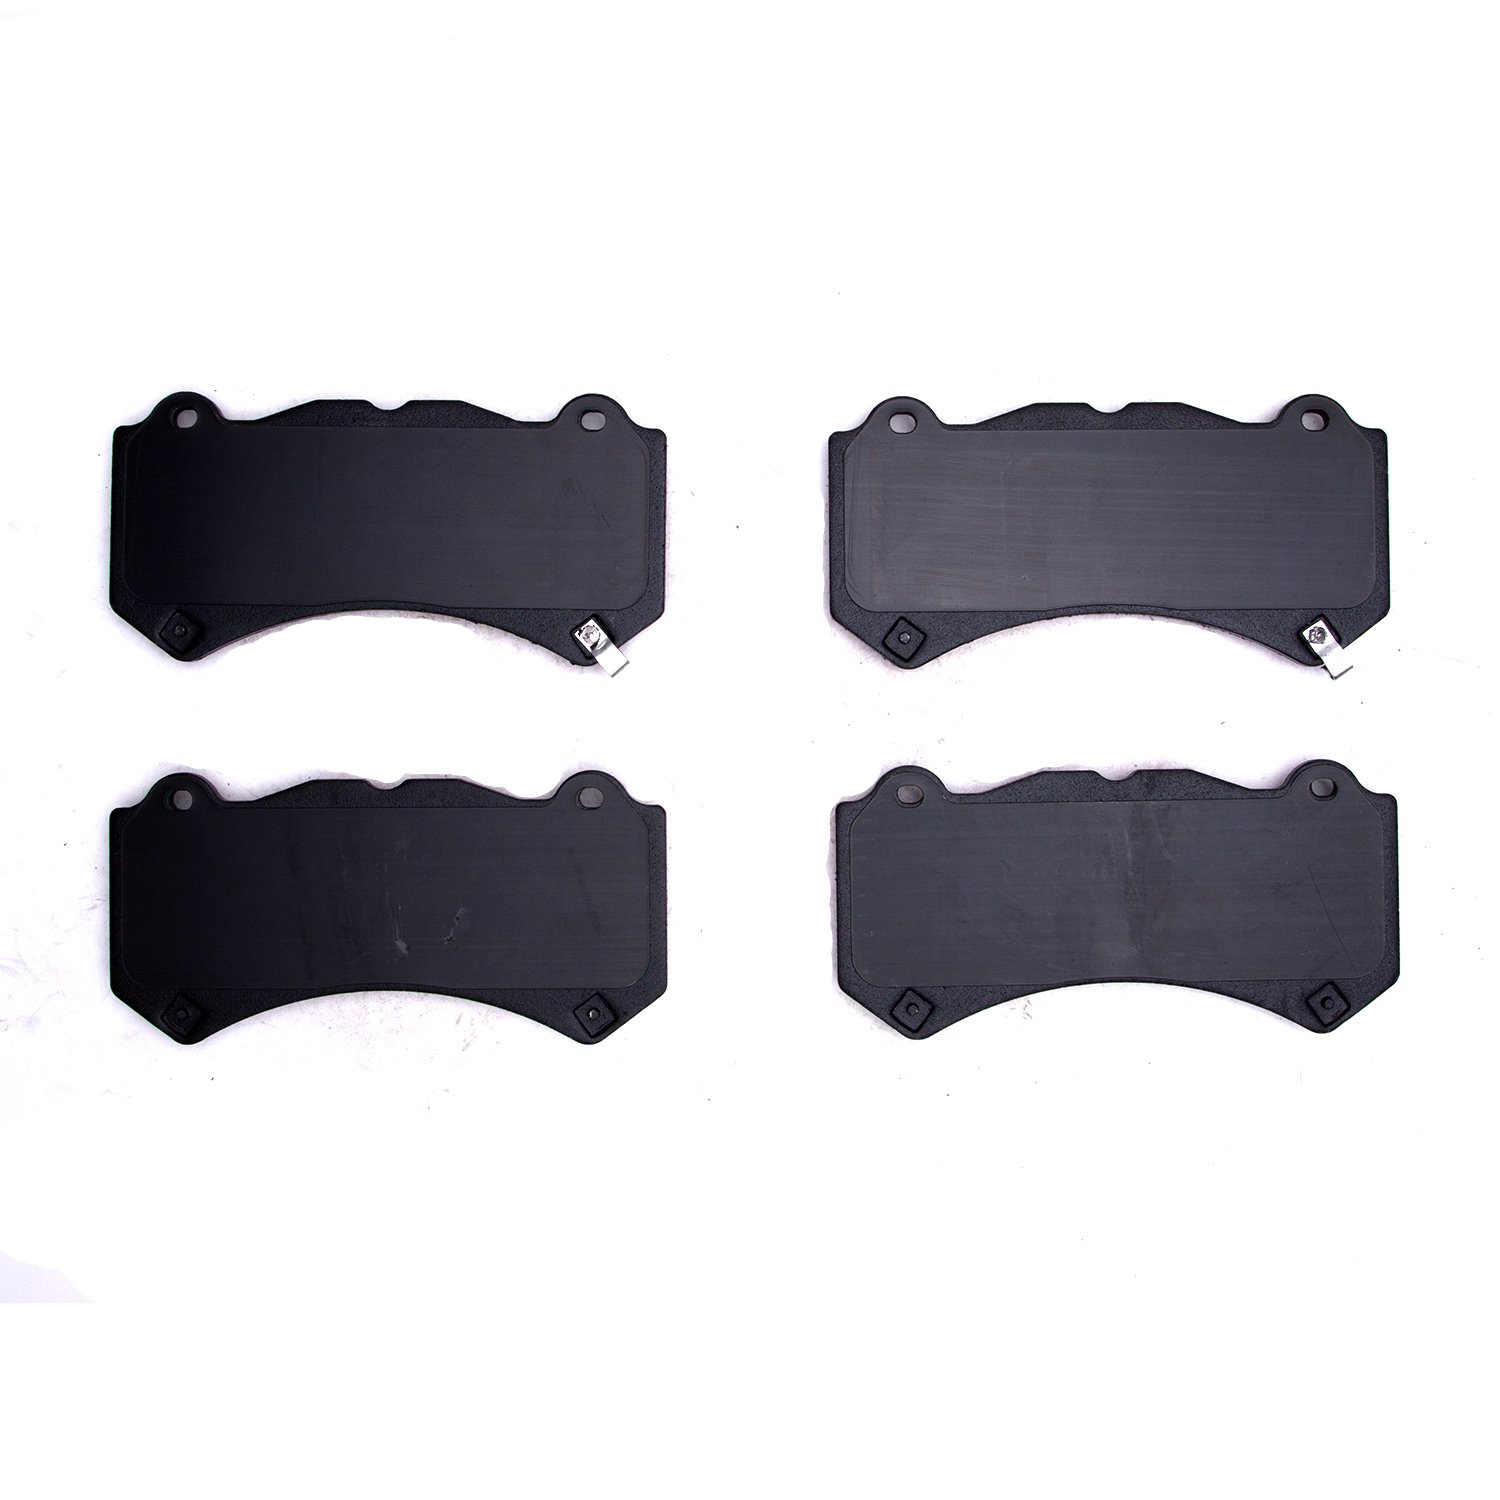 1600-1405-00 5000 Euro Ceramic Brake Pads, Fits Select Multiple Makes/Models, Position: Front